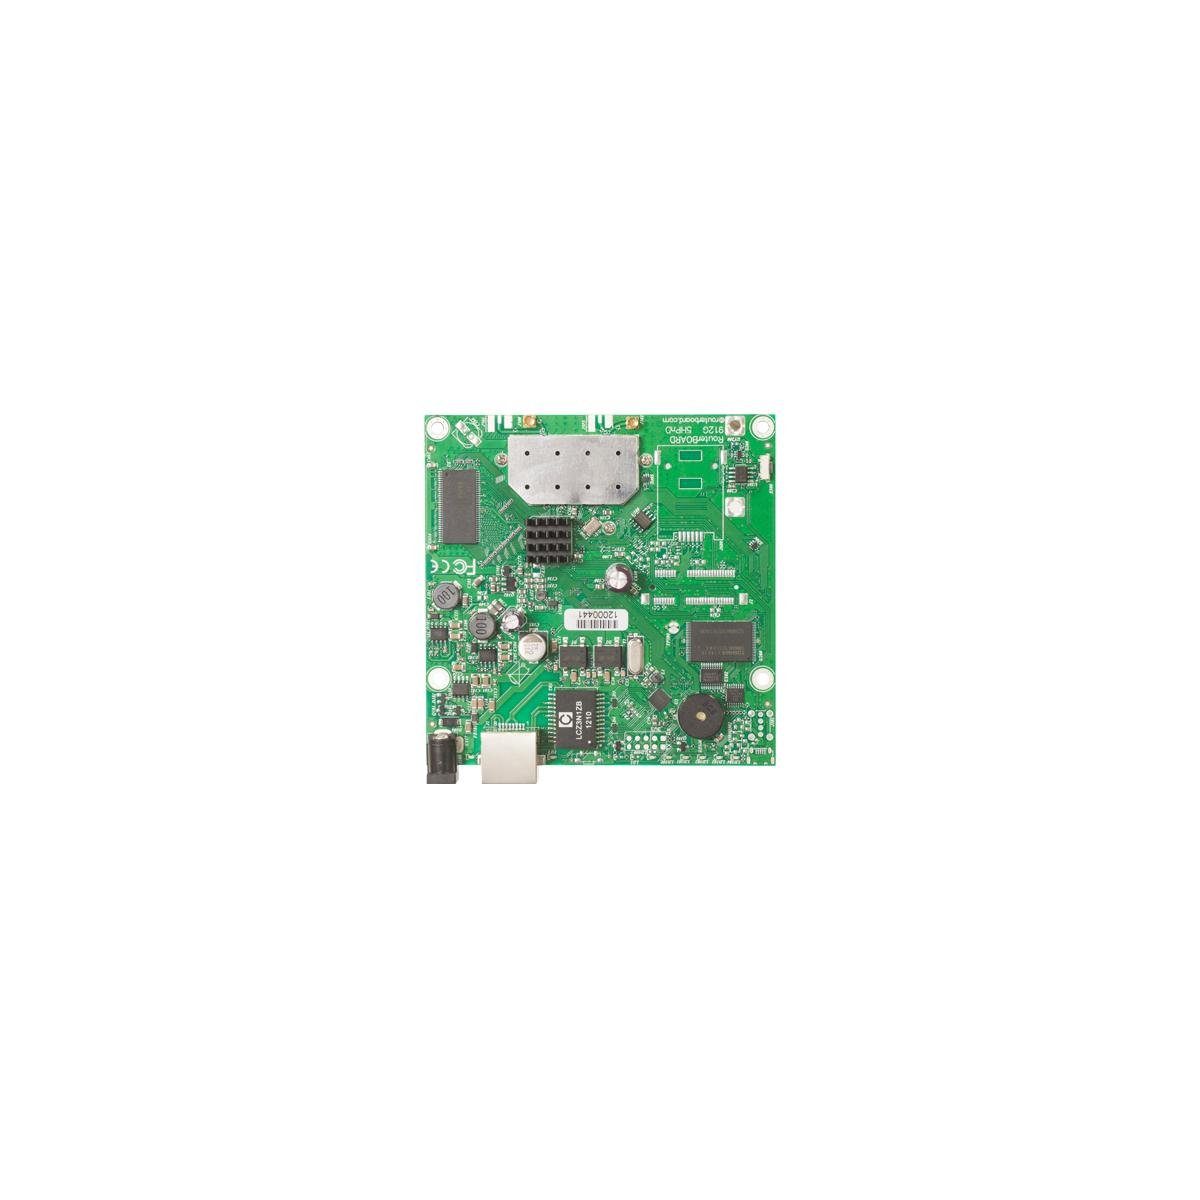 MikroTik RB911G-5HPND - WLAN-Router, 1x Gigabit, 600 MHz Netzwerk-Switch